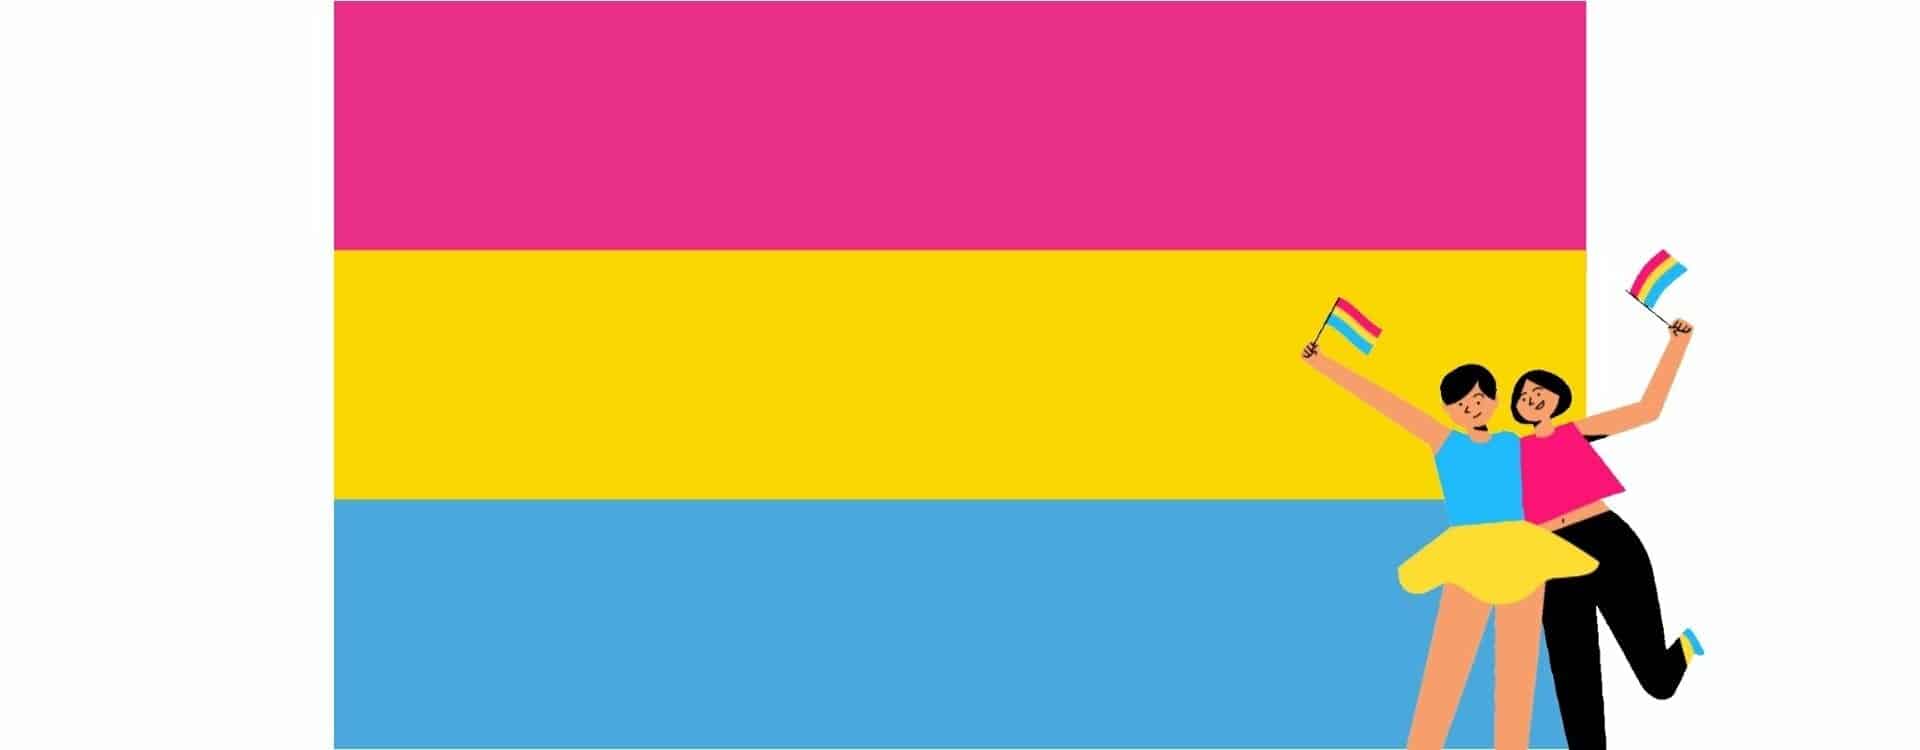 Pansexual - rainbow flag